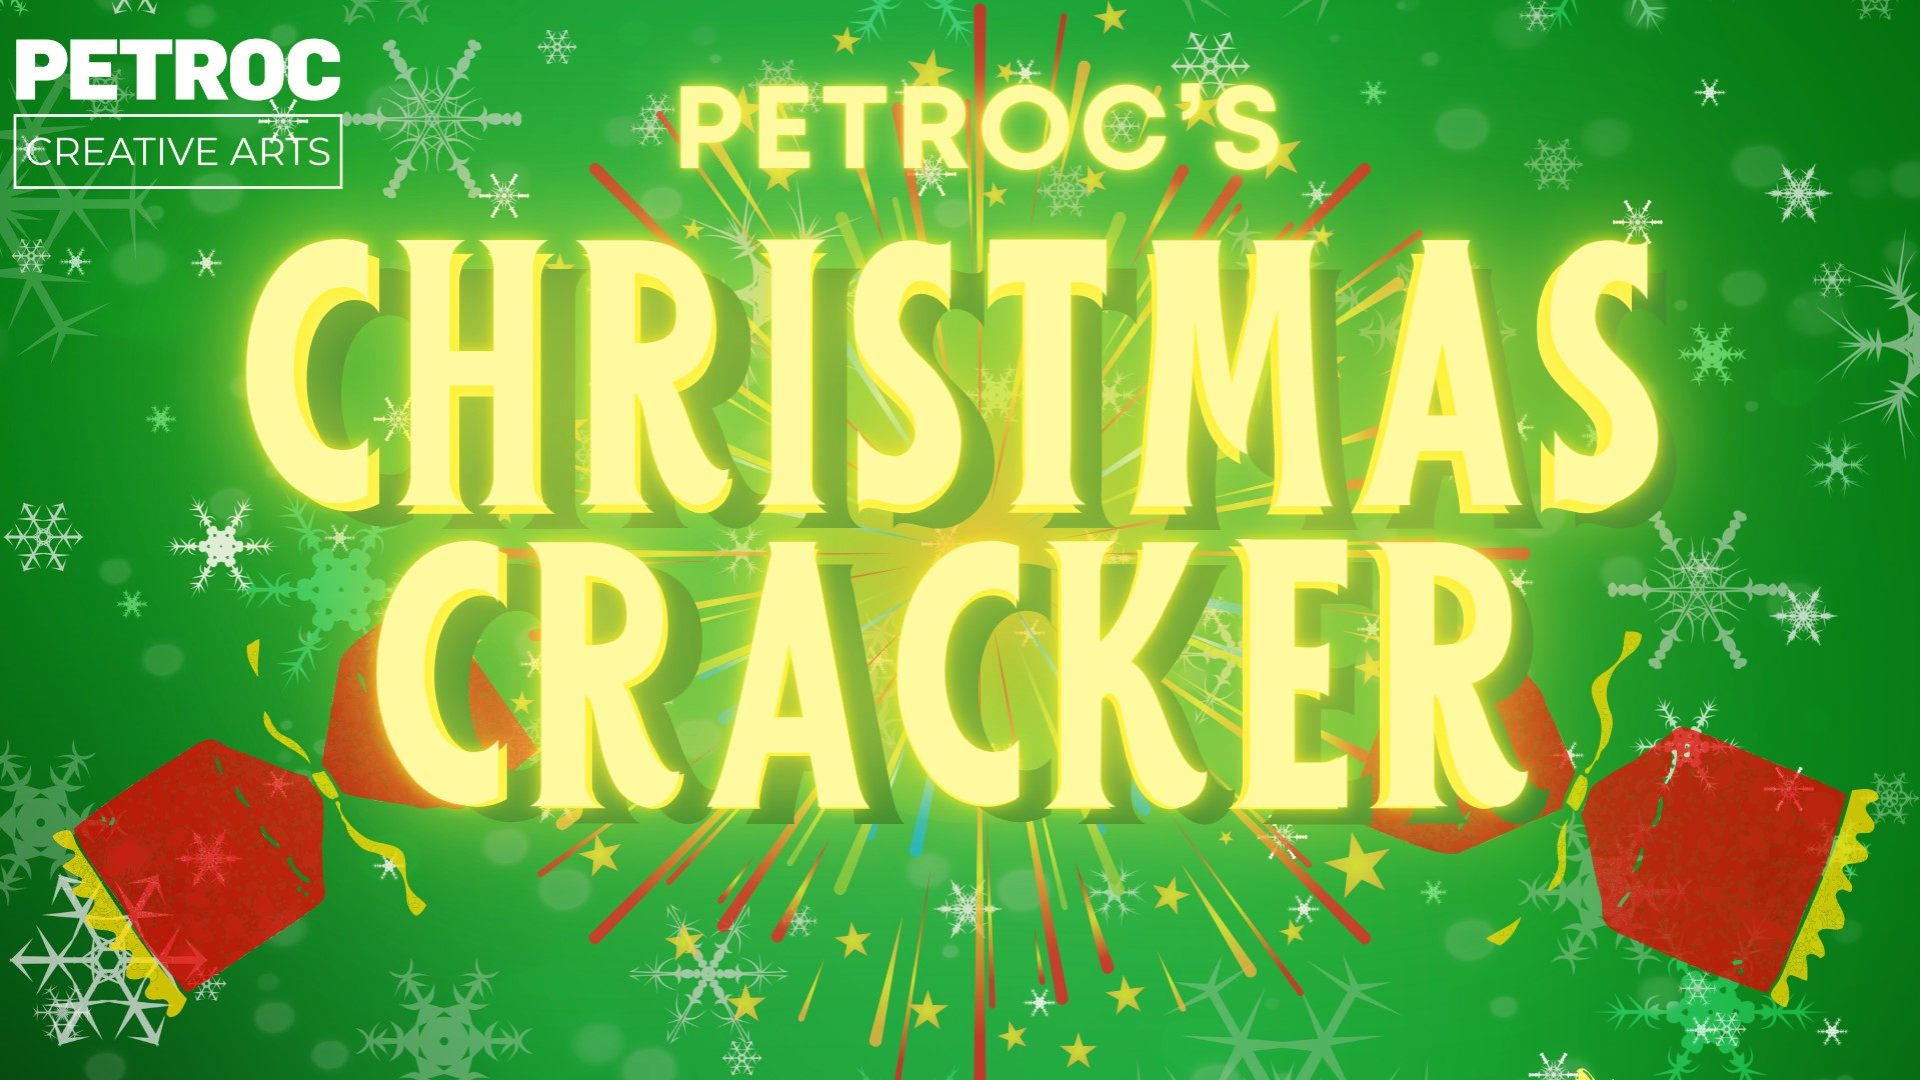 Petroc&#8217;s Christmas Cracker